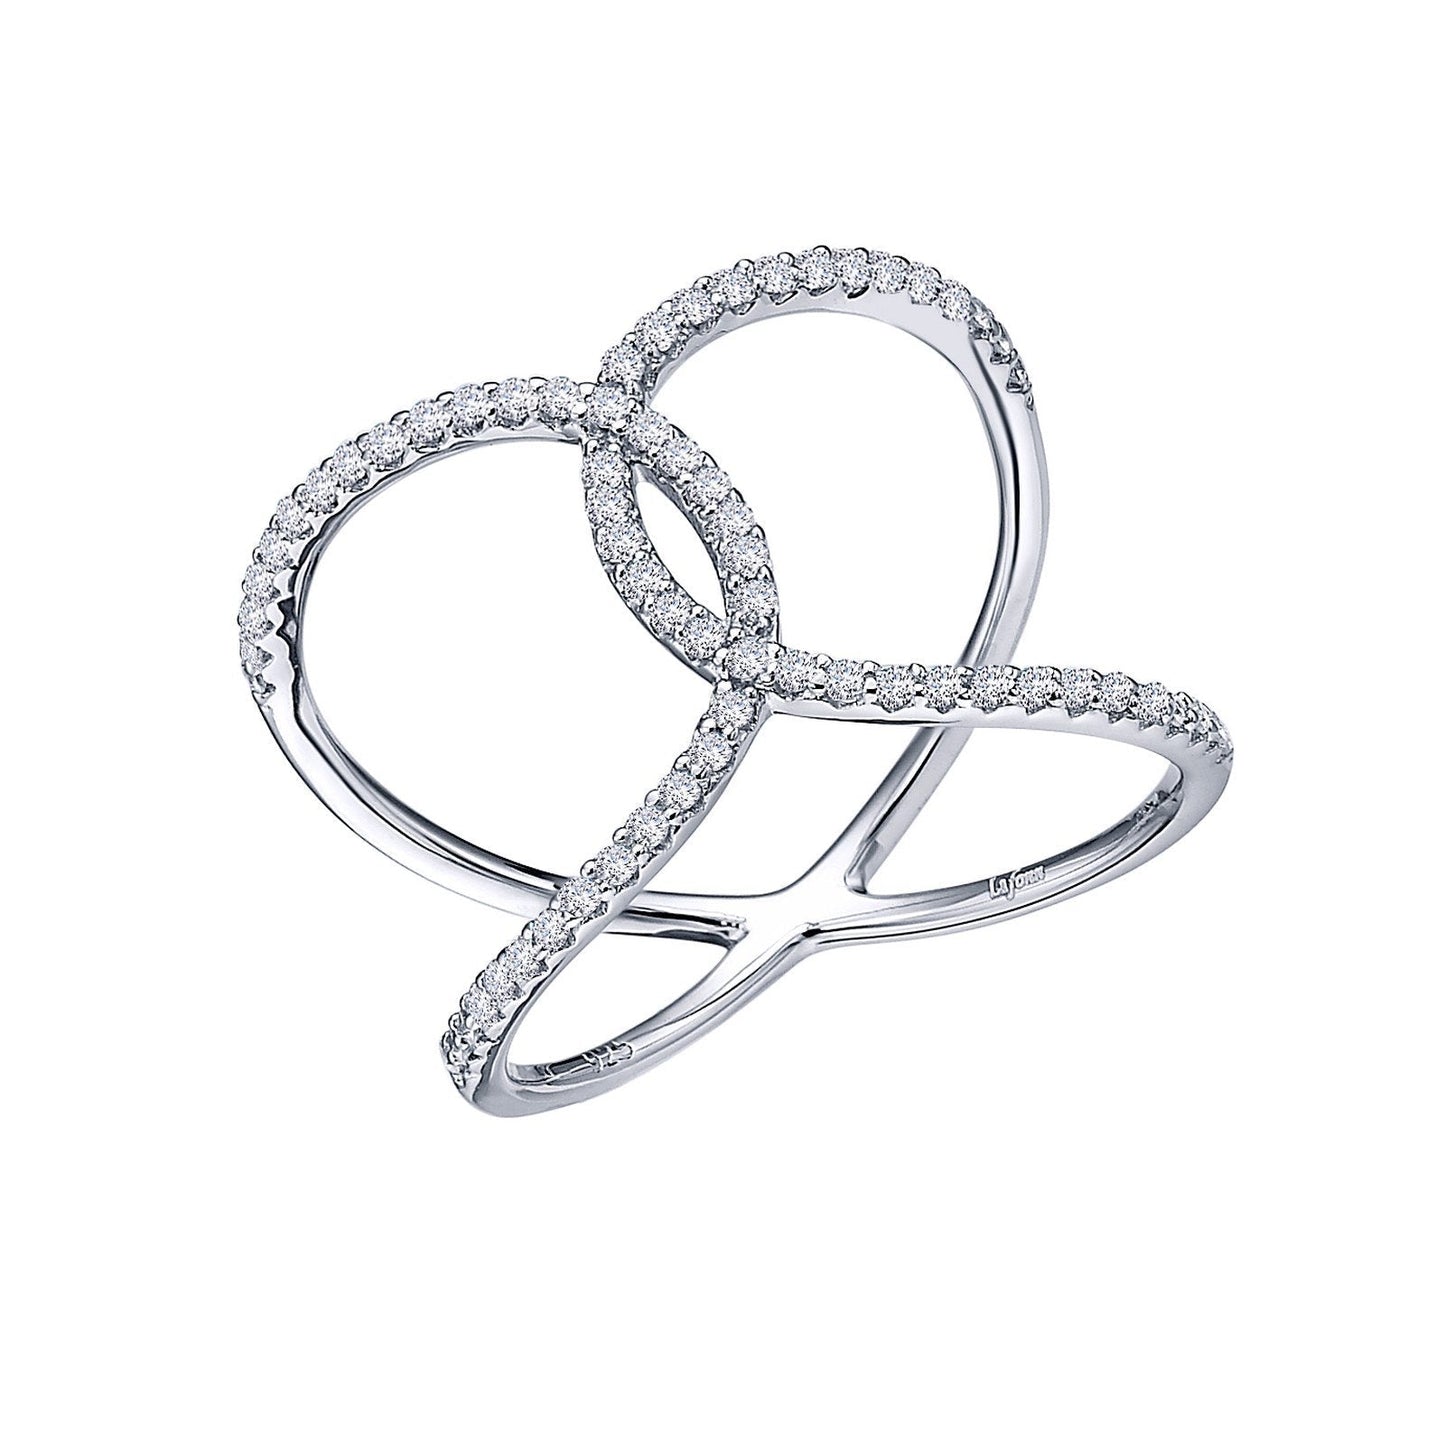 Lafonn Open Crisscross Ring Simulated Diamond RINGS Size 5 Platinum 0.66 CTS 